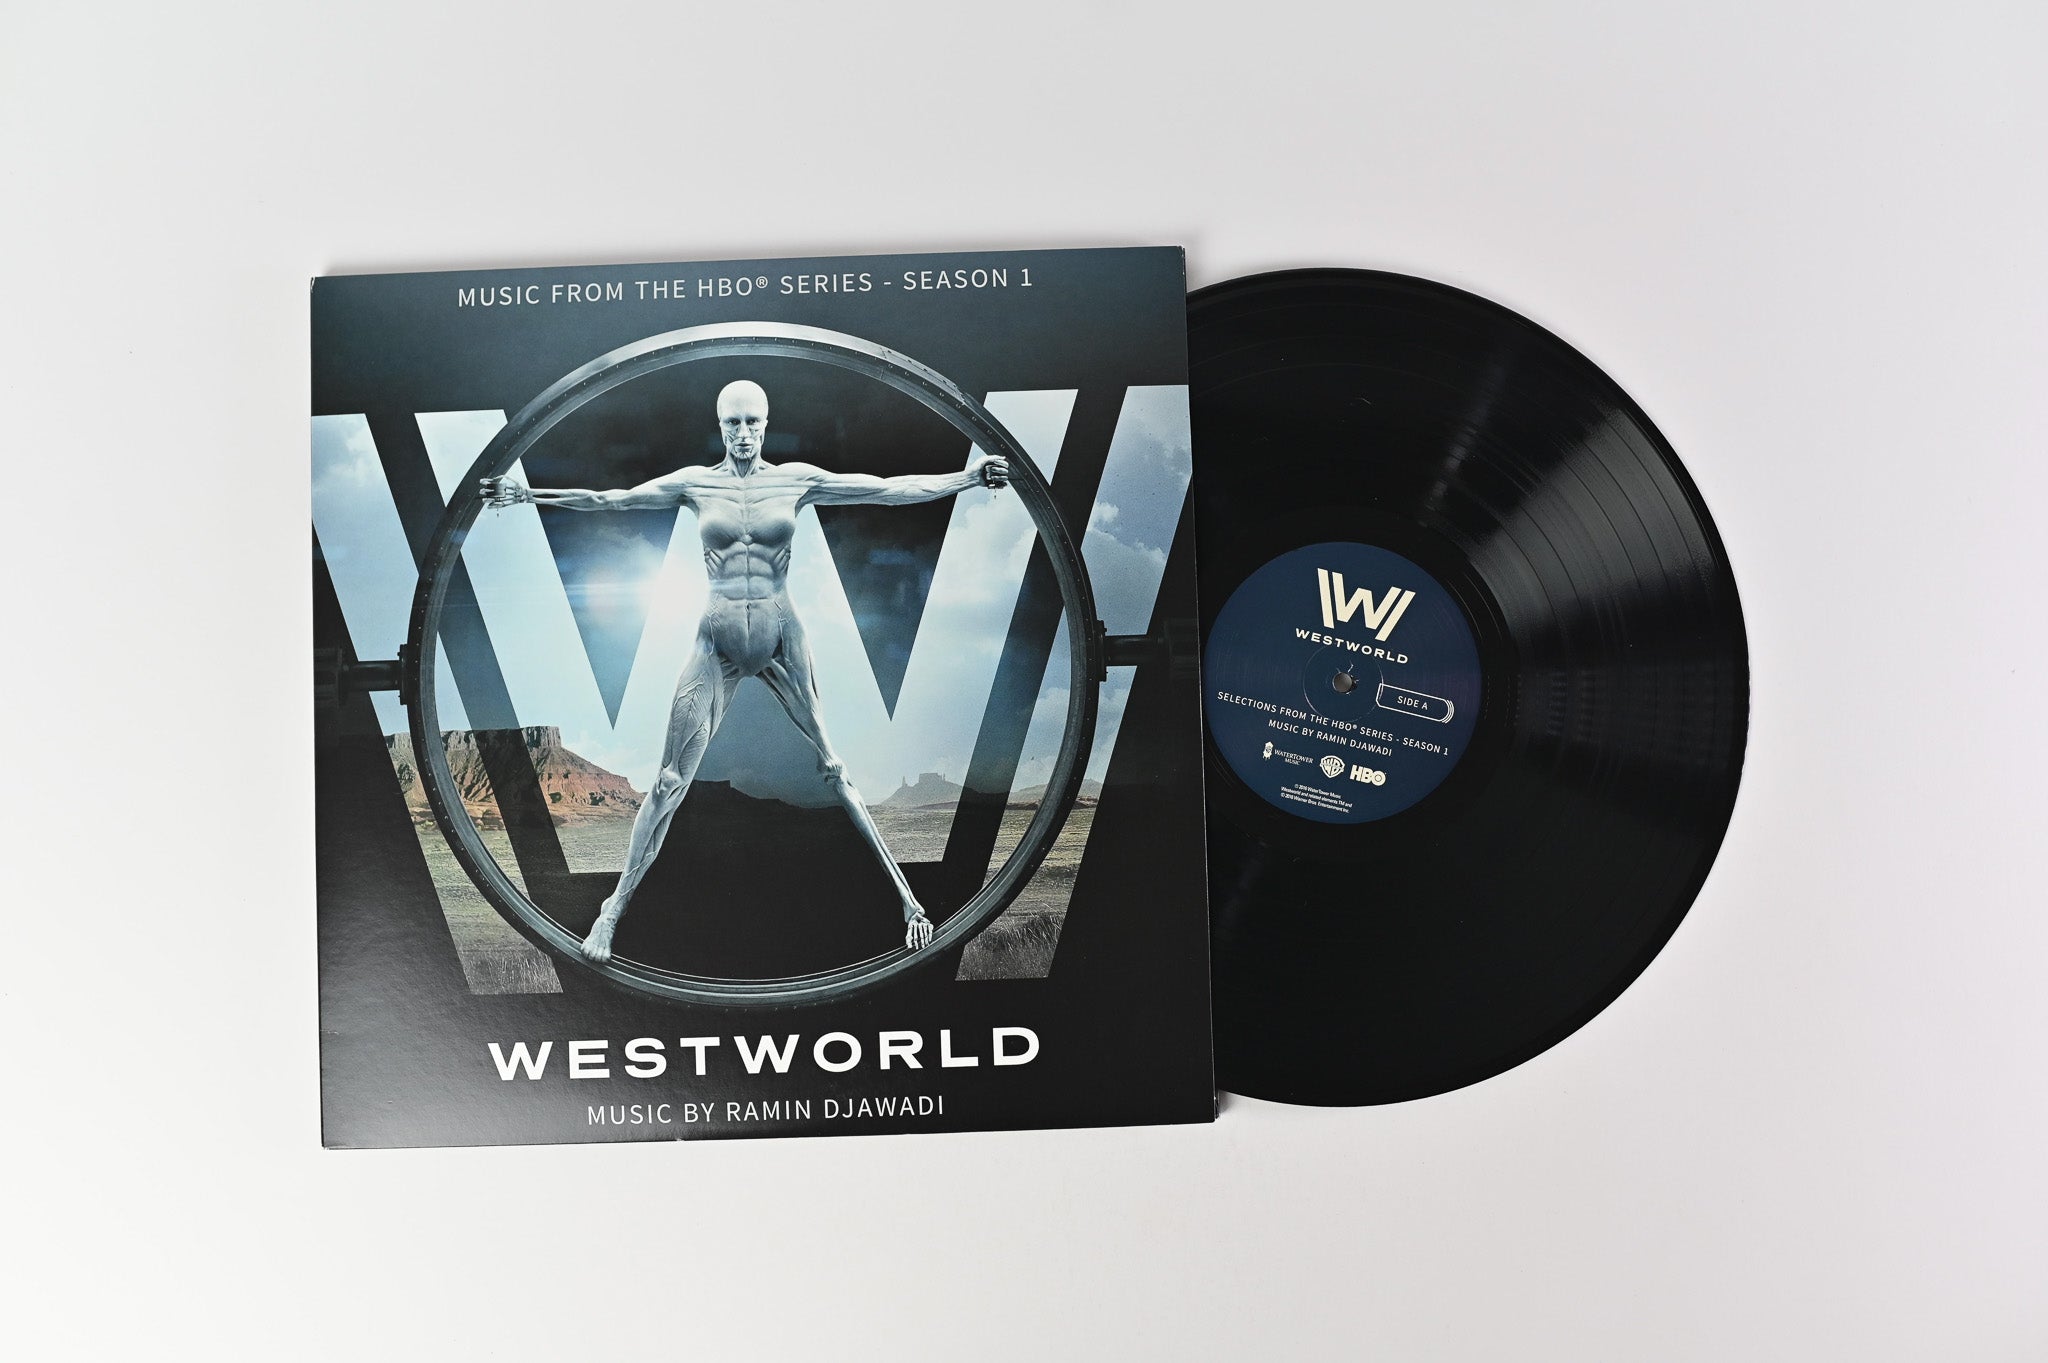 Ramin Djawadi - Westworld (Music From The HBO® Series - Season 1) on Watertower